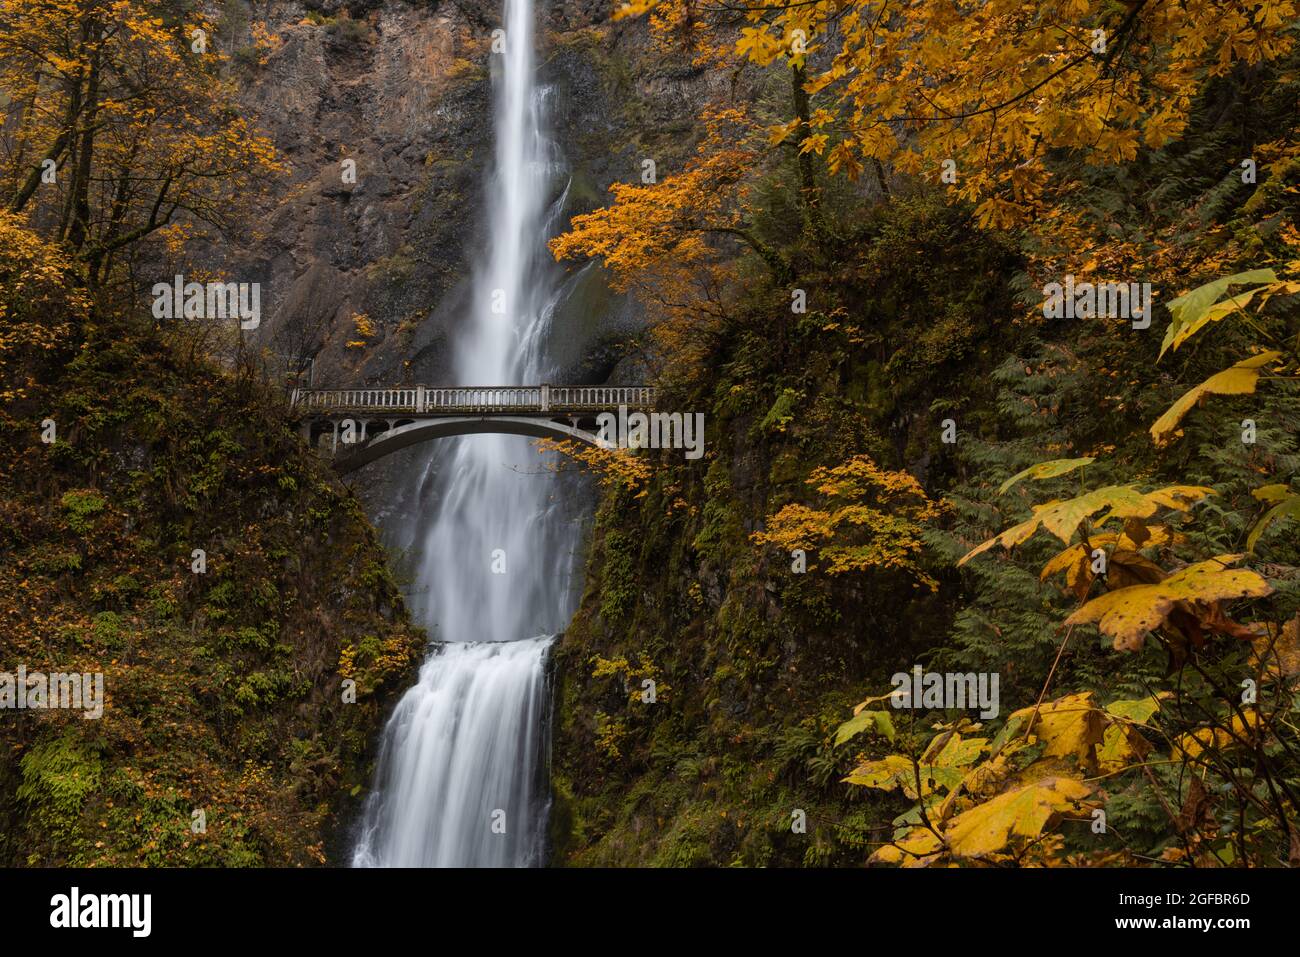 Herbstsaison und Herbstlaub am Wasserfall Multnomah Falls, Columbia River Gorge, Oregon, Pacific Northwest USA Stockfoto